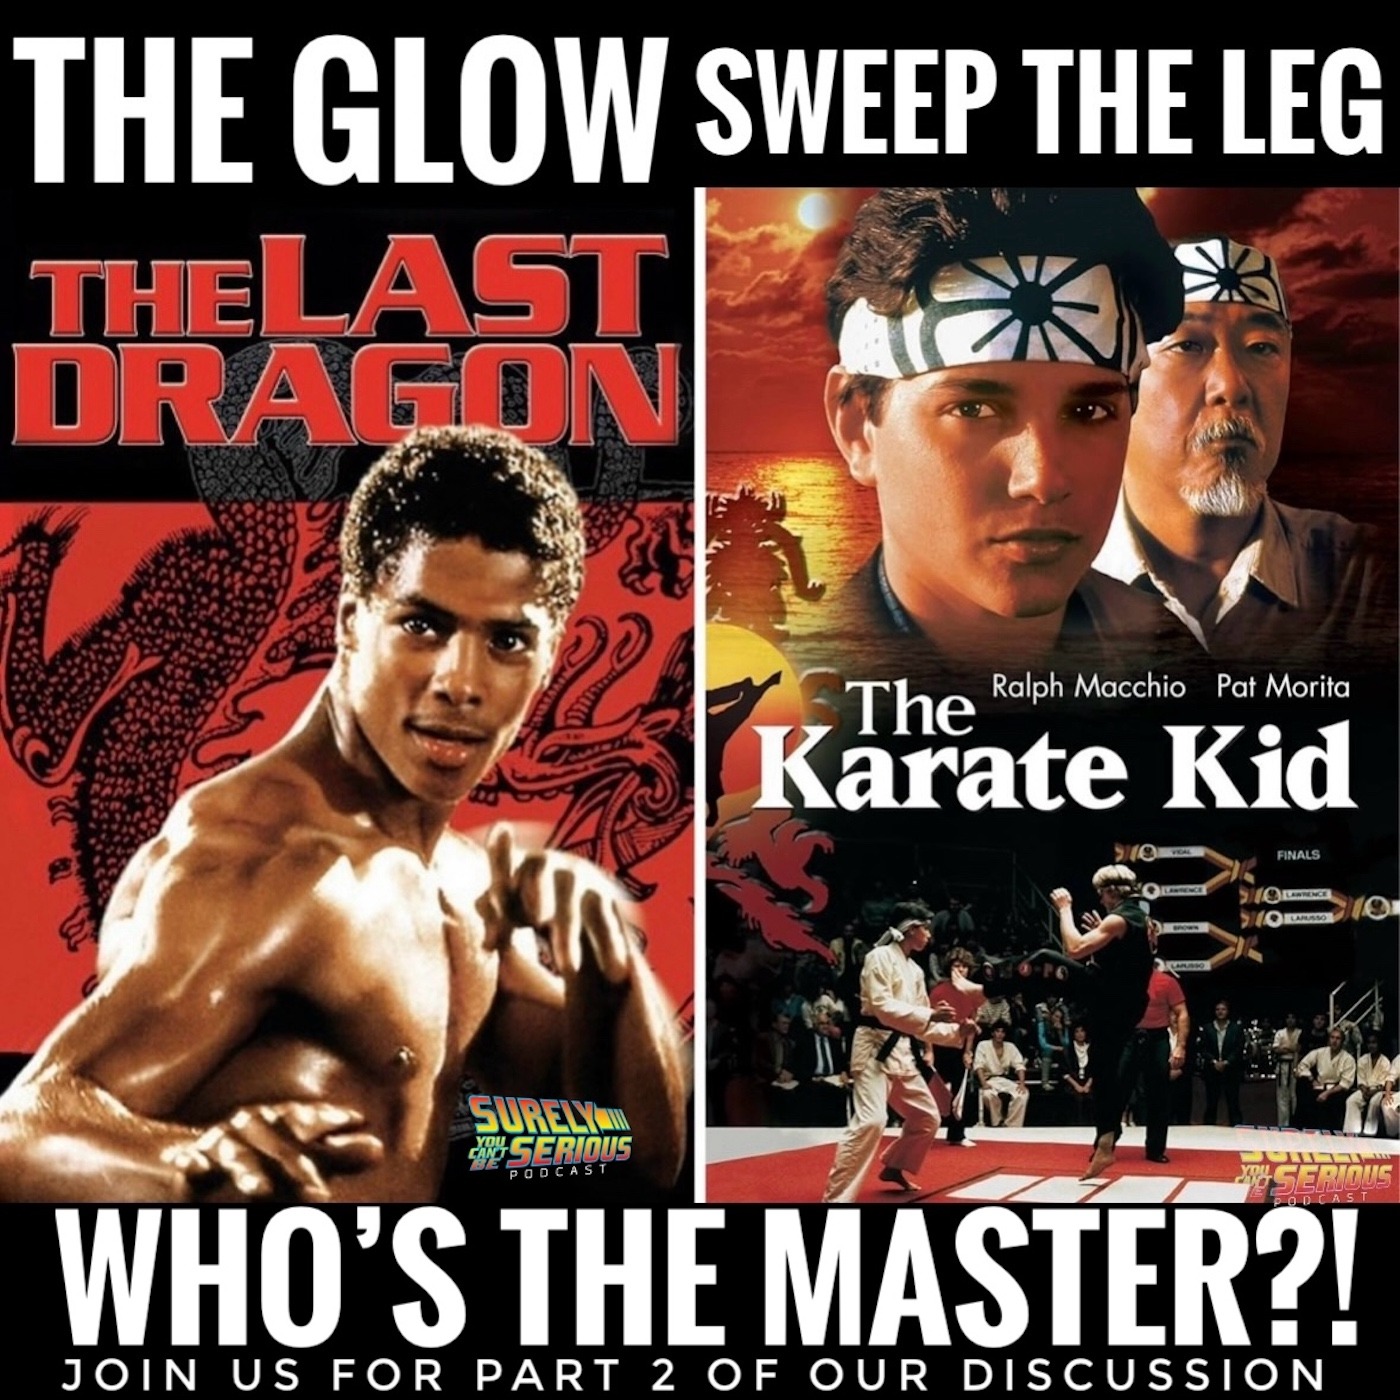 "The Karate Kid" (1984) vs. "The Last Dragon" (1985): Part 2